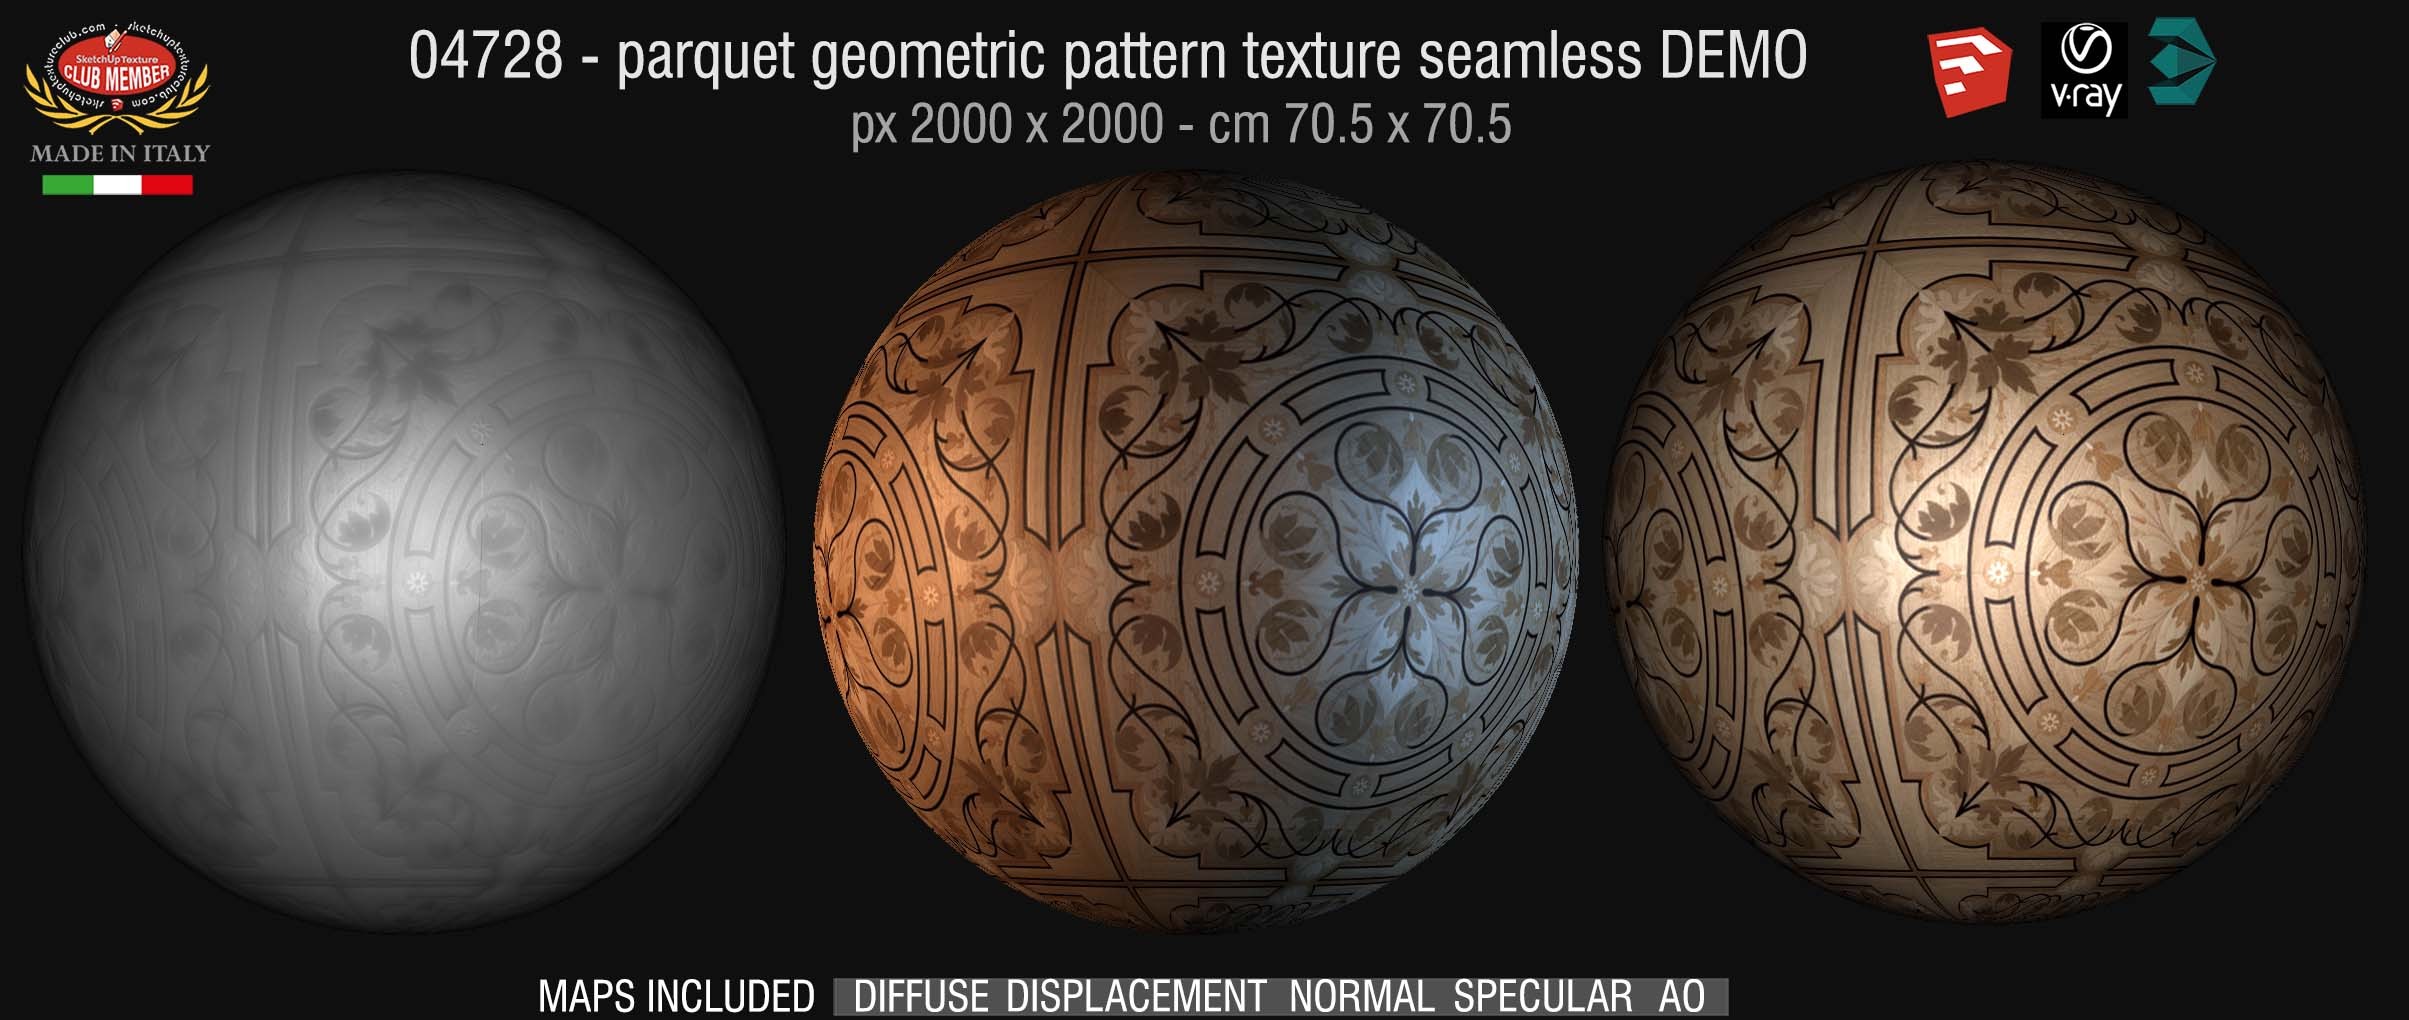 04728 HR Parquet geometric pattern texture seamless + maps DEMO